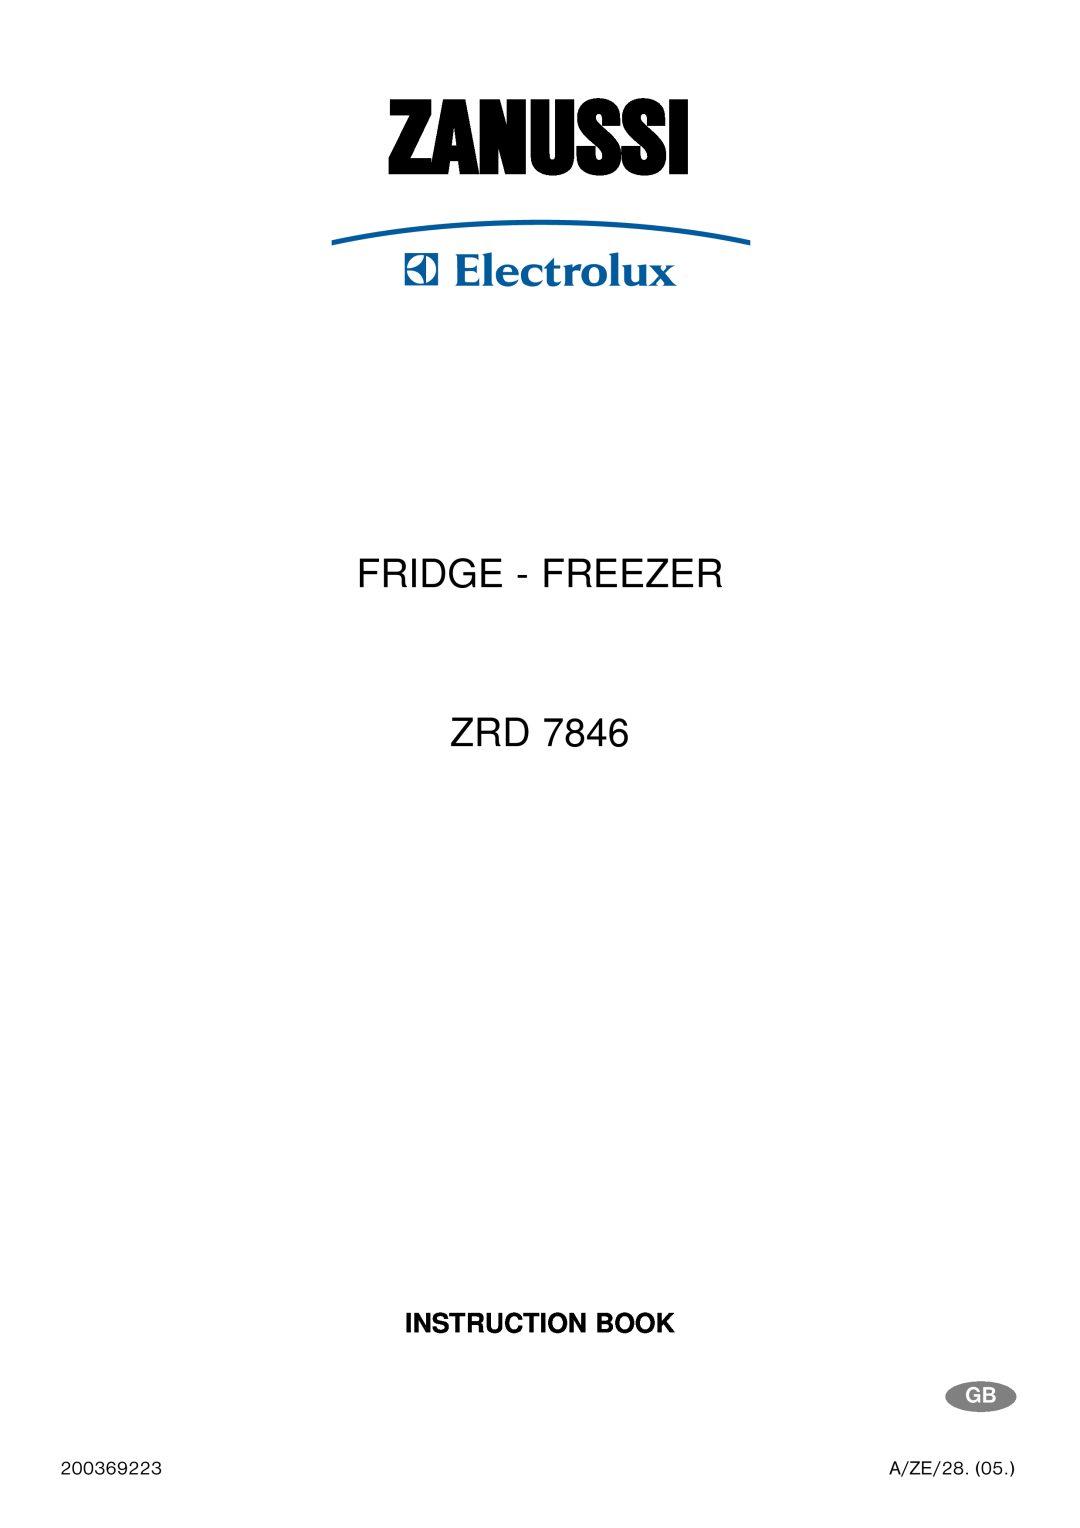 Zanussi ZRD 7846 manual Zanussi, Fridge - Freezer Zrd, Instruction Book 